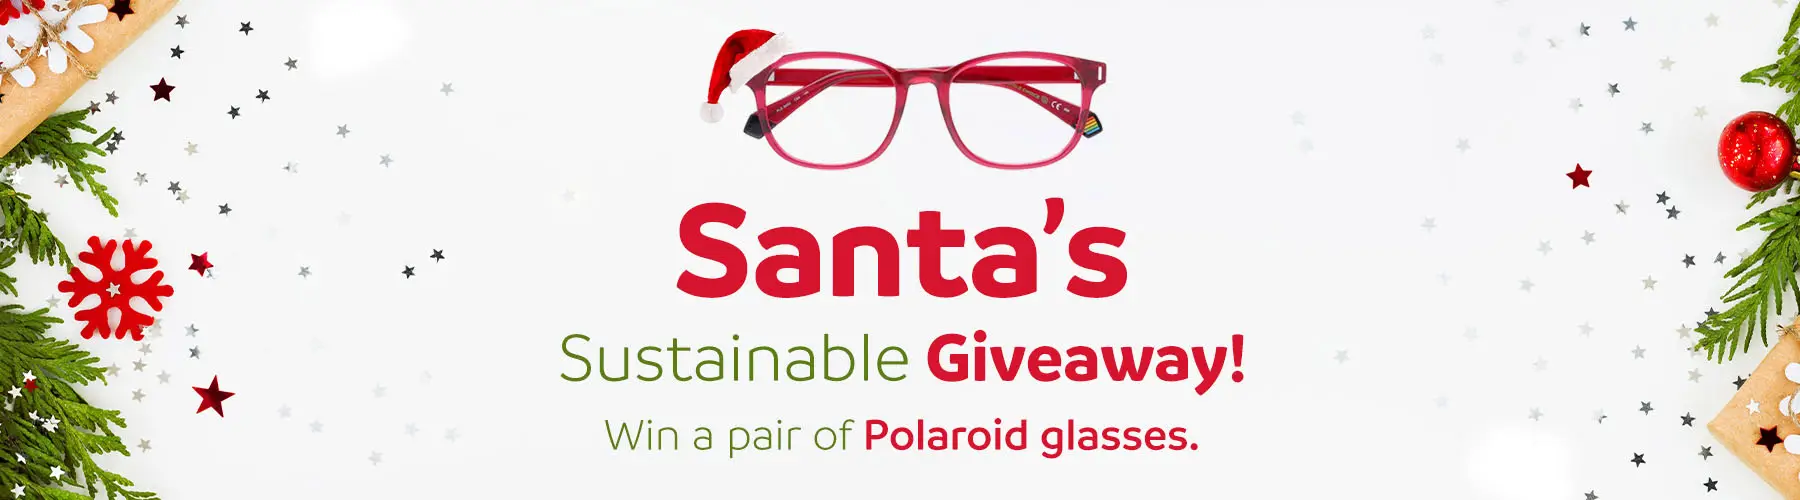 Santa’s Sustainable Giveaway